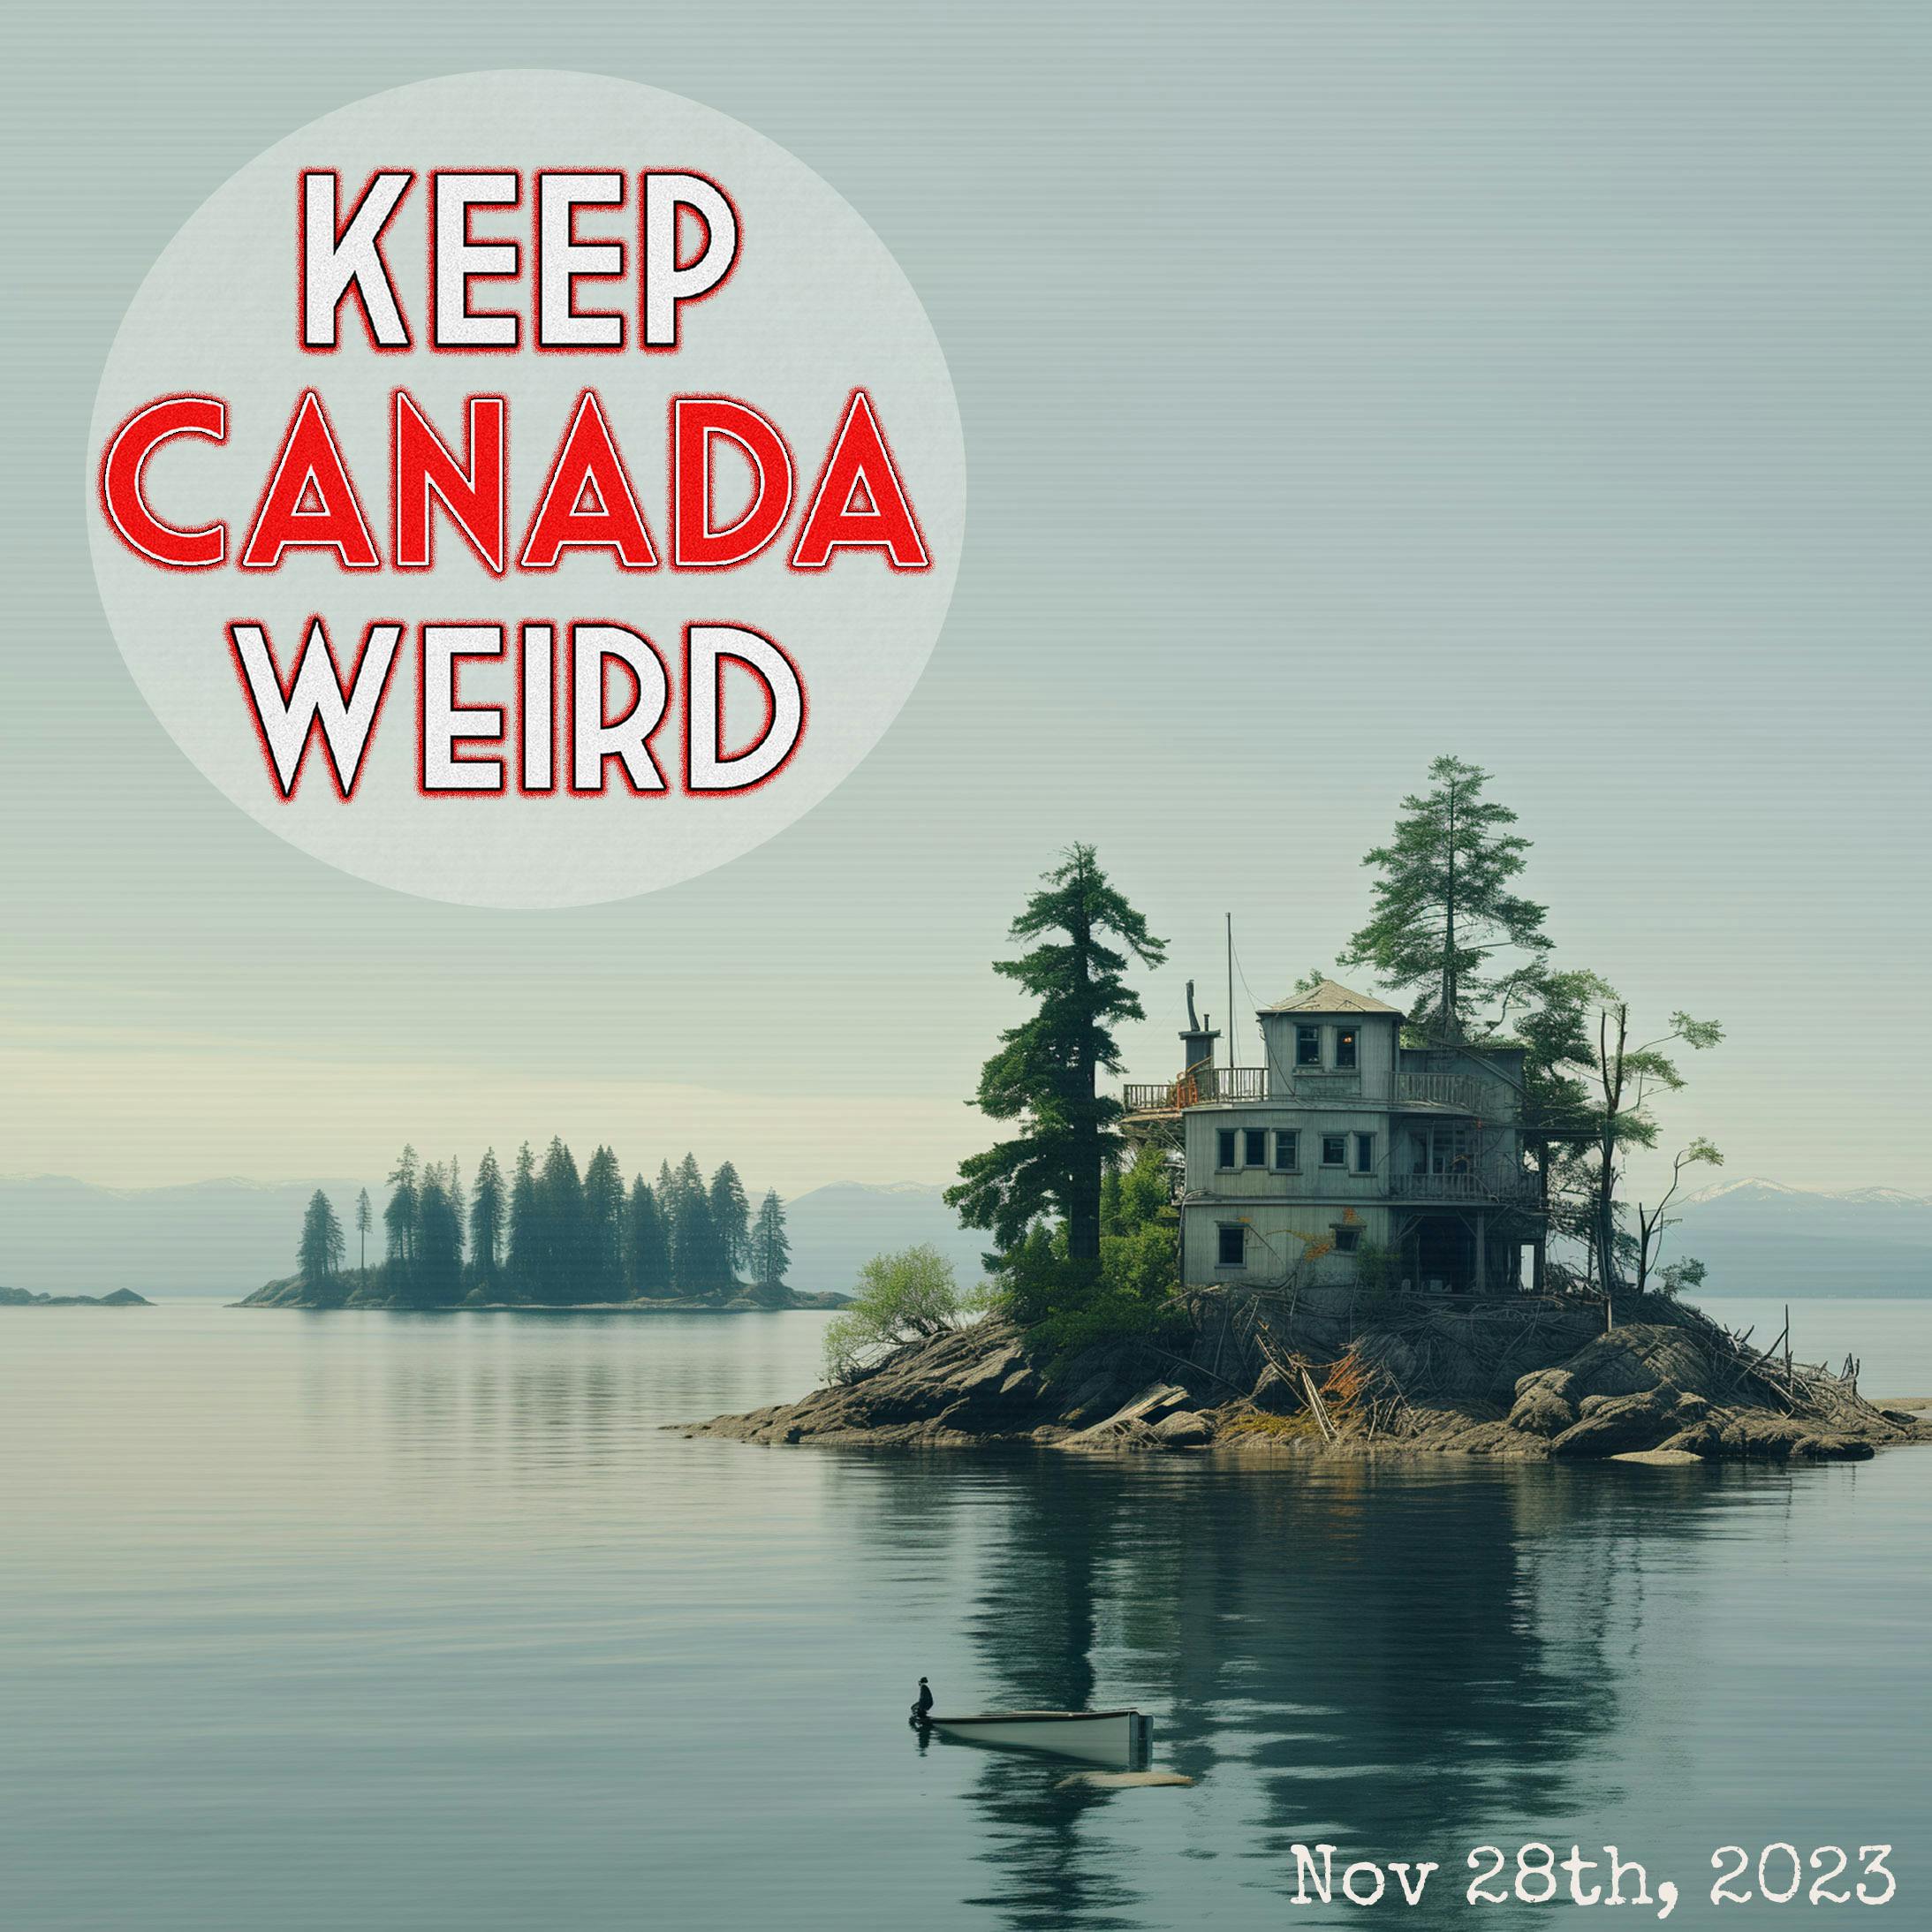 KEEP CANADA WEIRD - Nov 28th, 2023 - Quadra Island, Goodwill Donation, Self Check-Outs